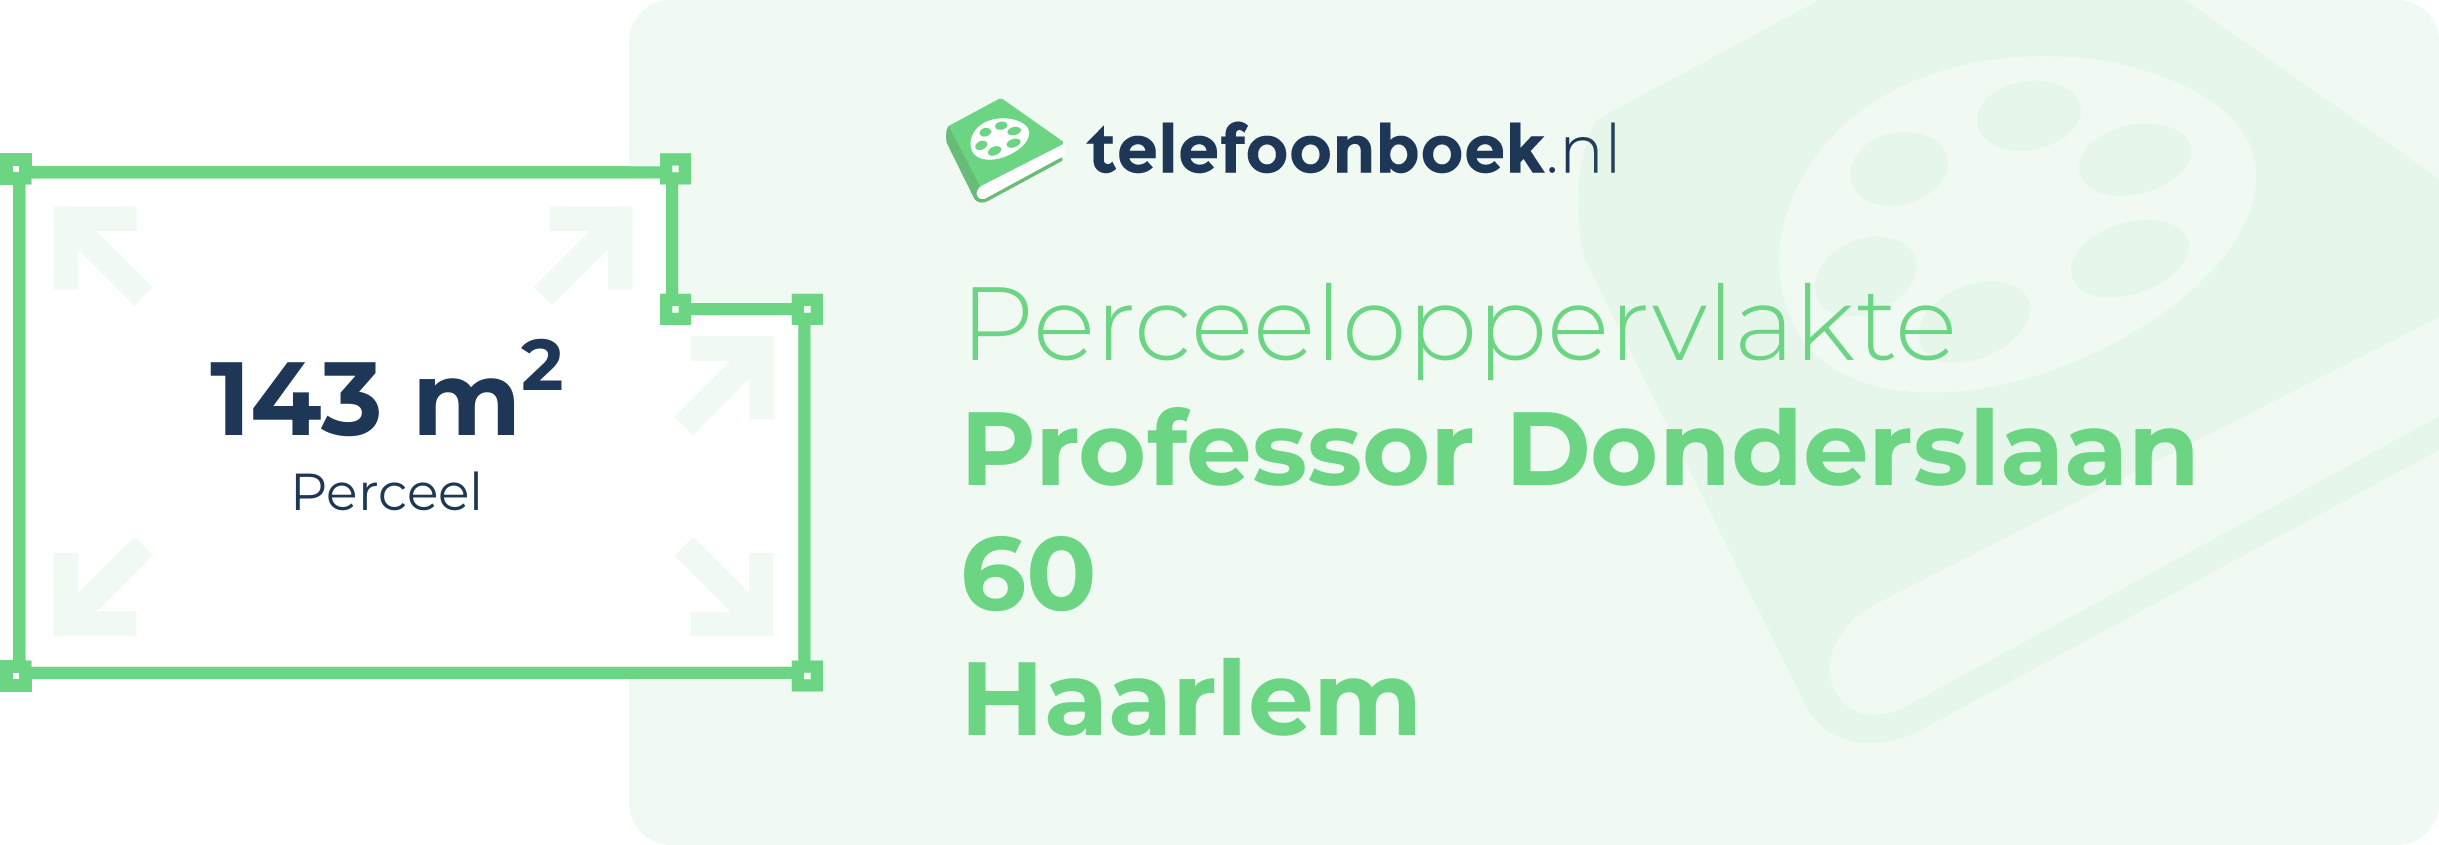 Perceeloppervlakte Professor Donderslaan 60 Haarlem